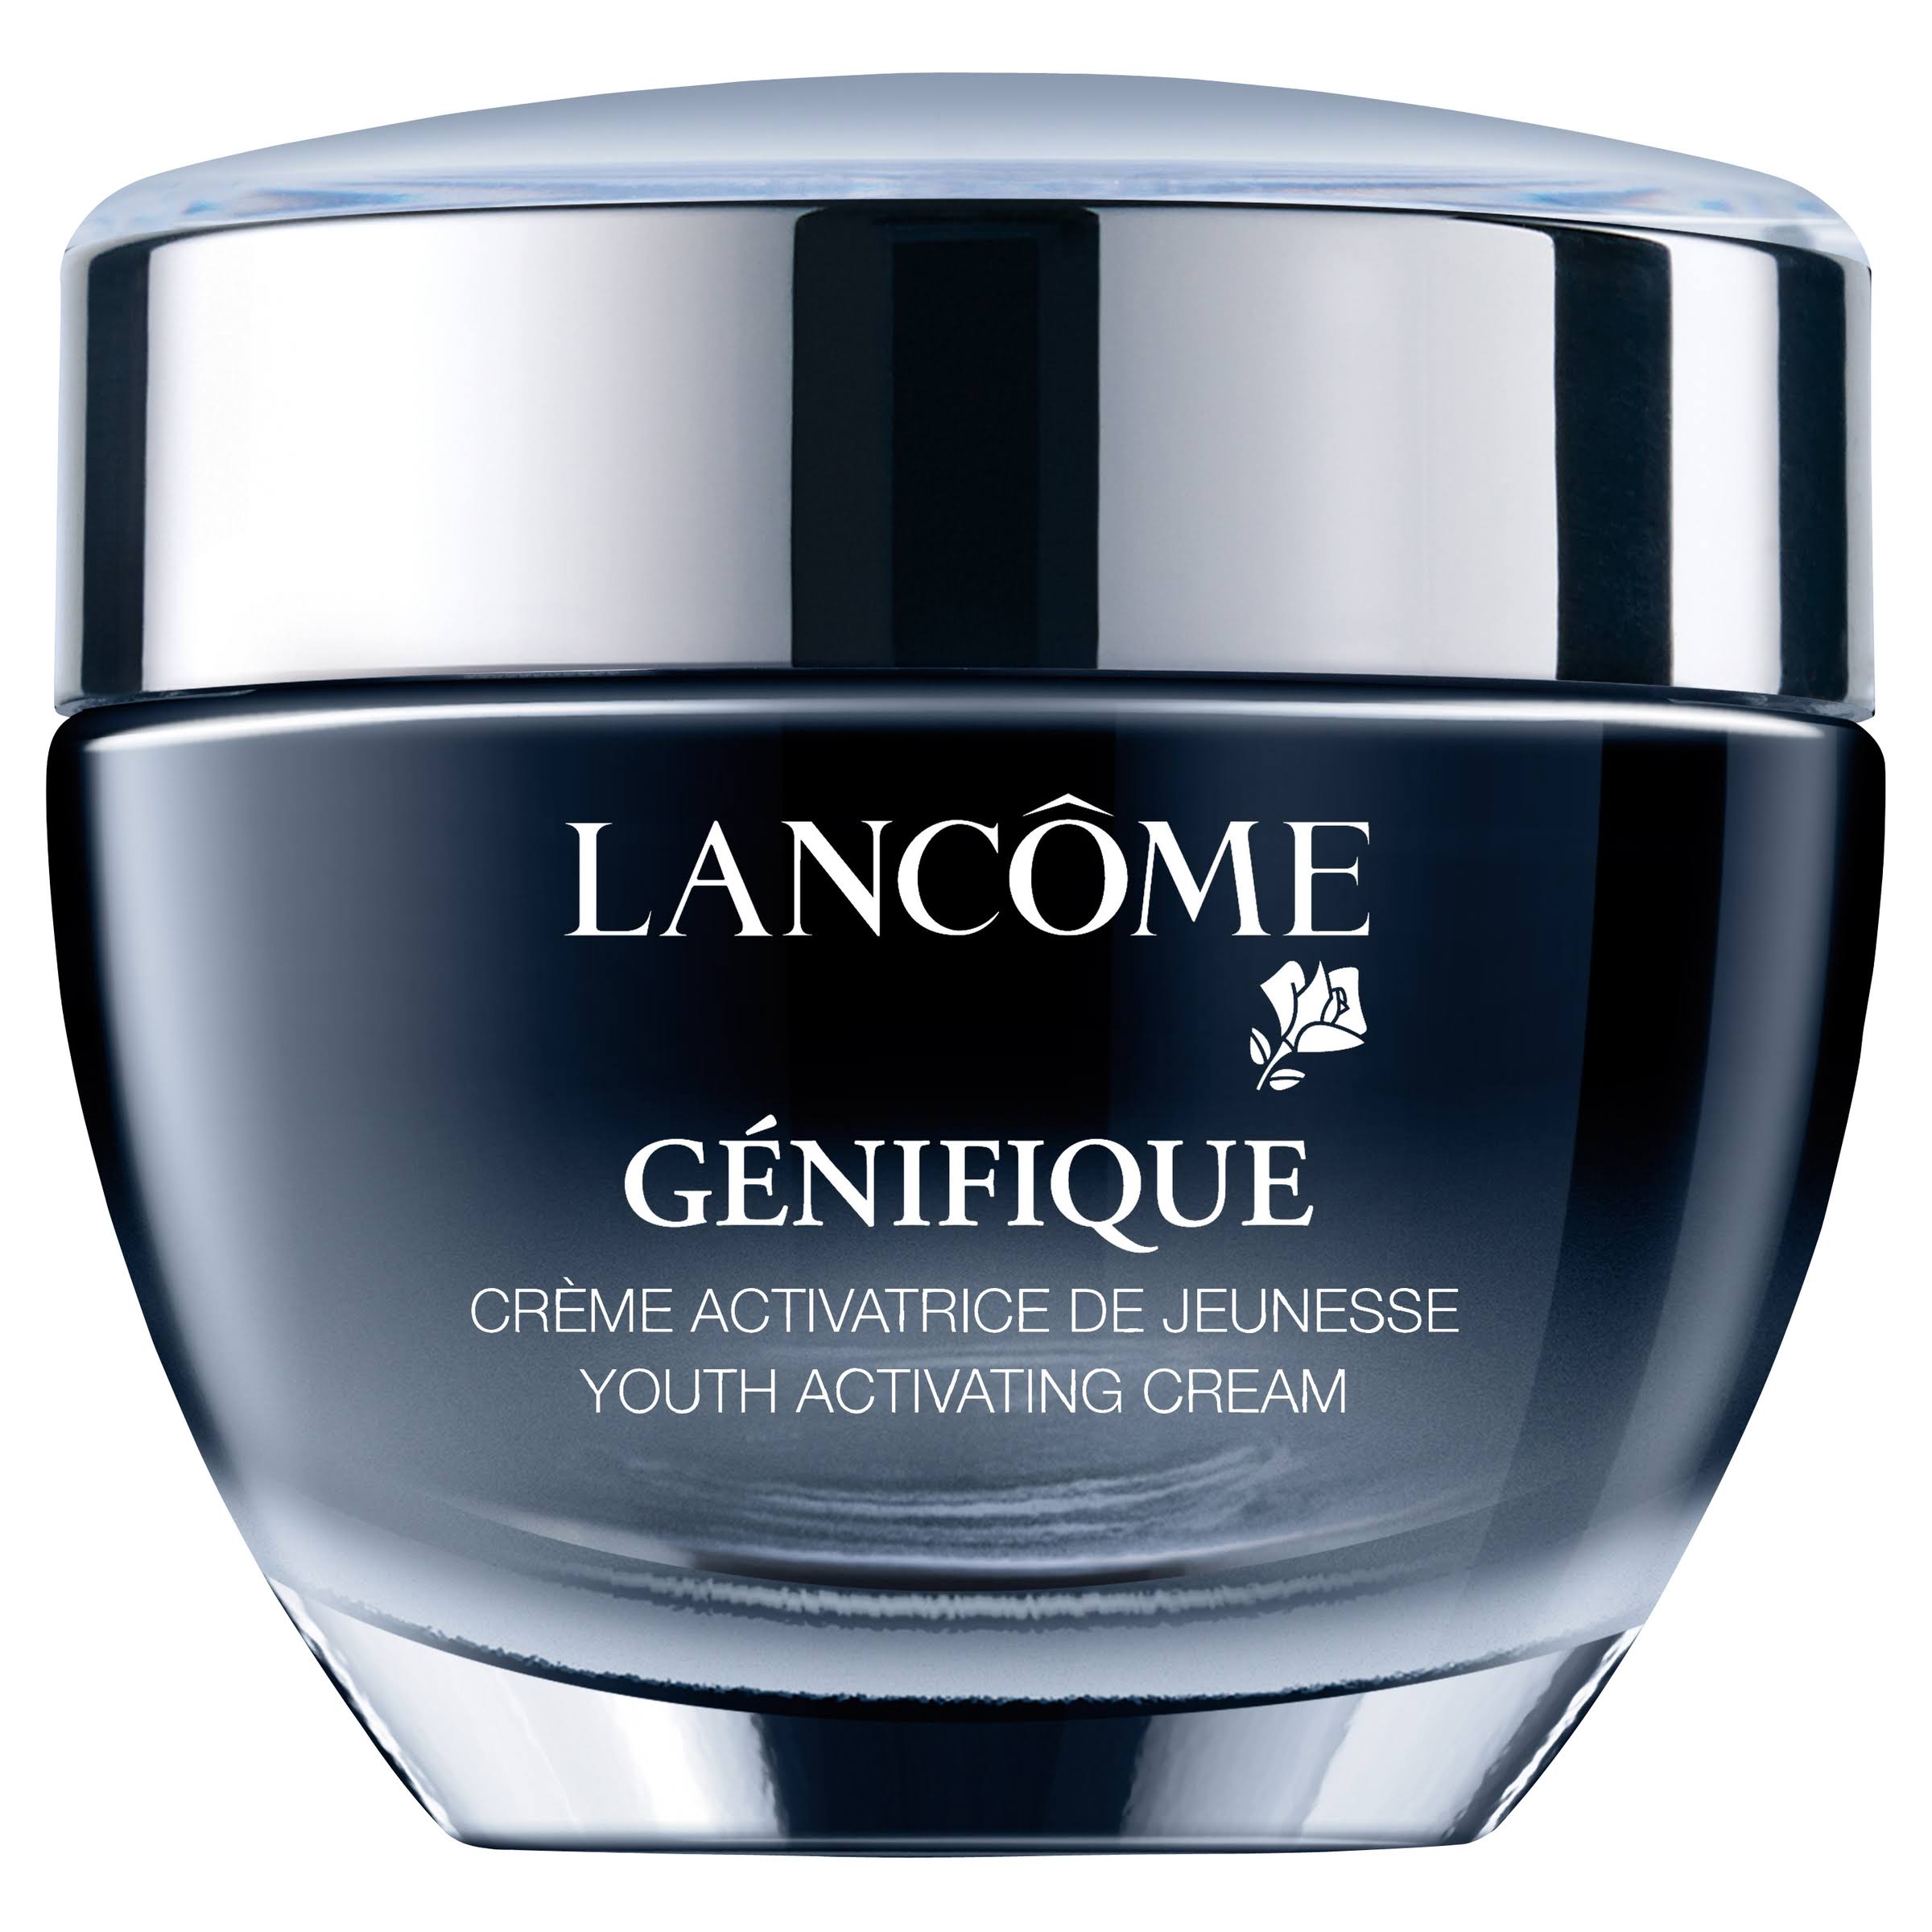 Lancome Genifique Youth Activating Cream - 50ml